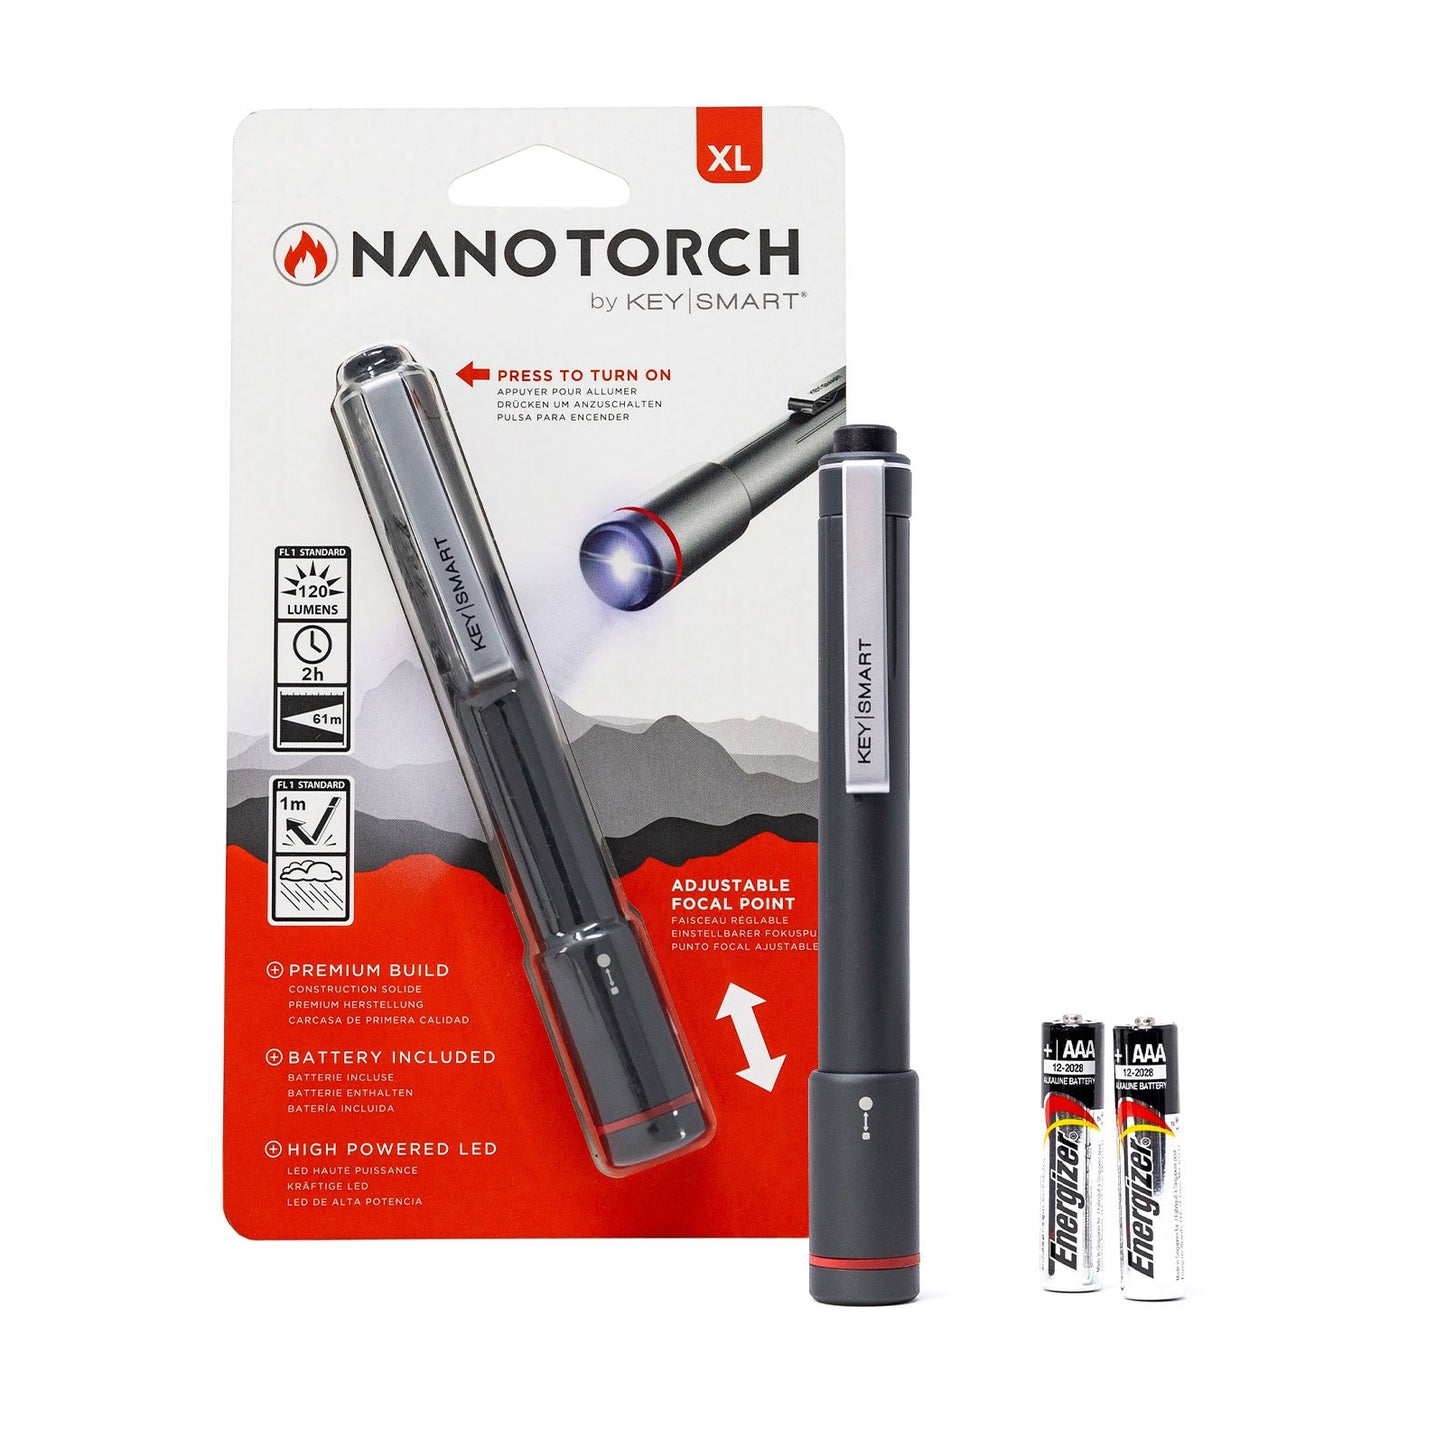 NanoTorch XL